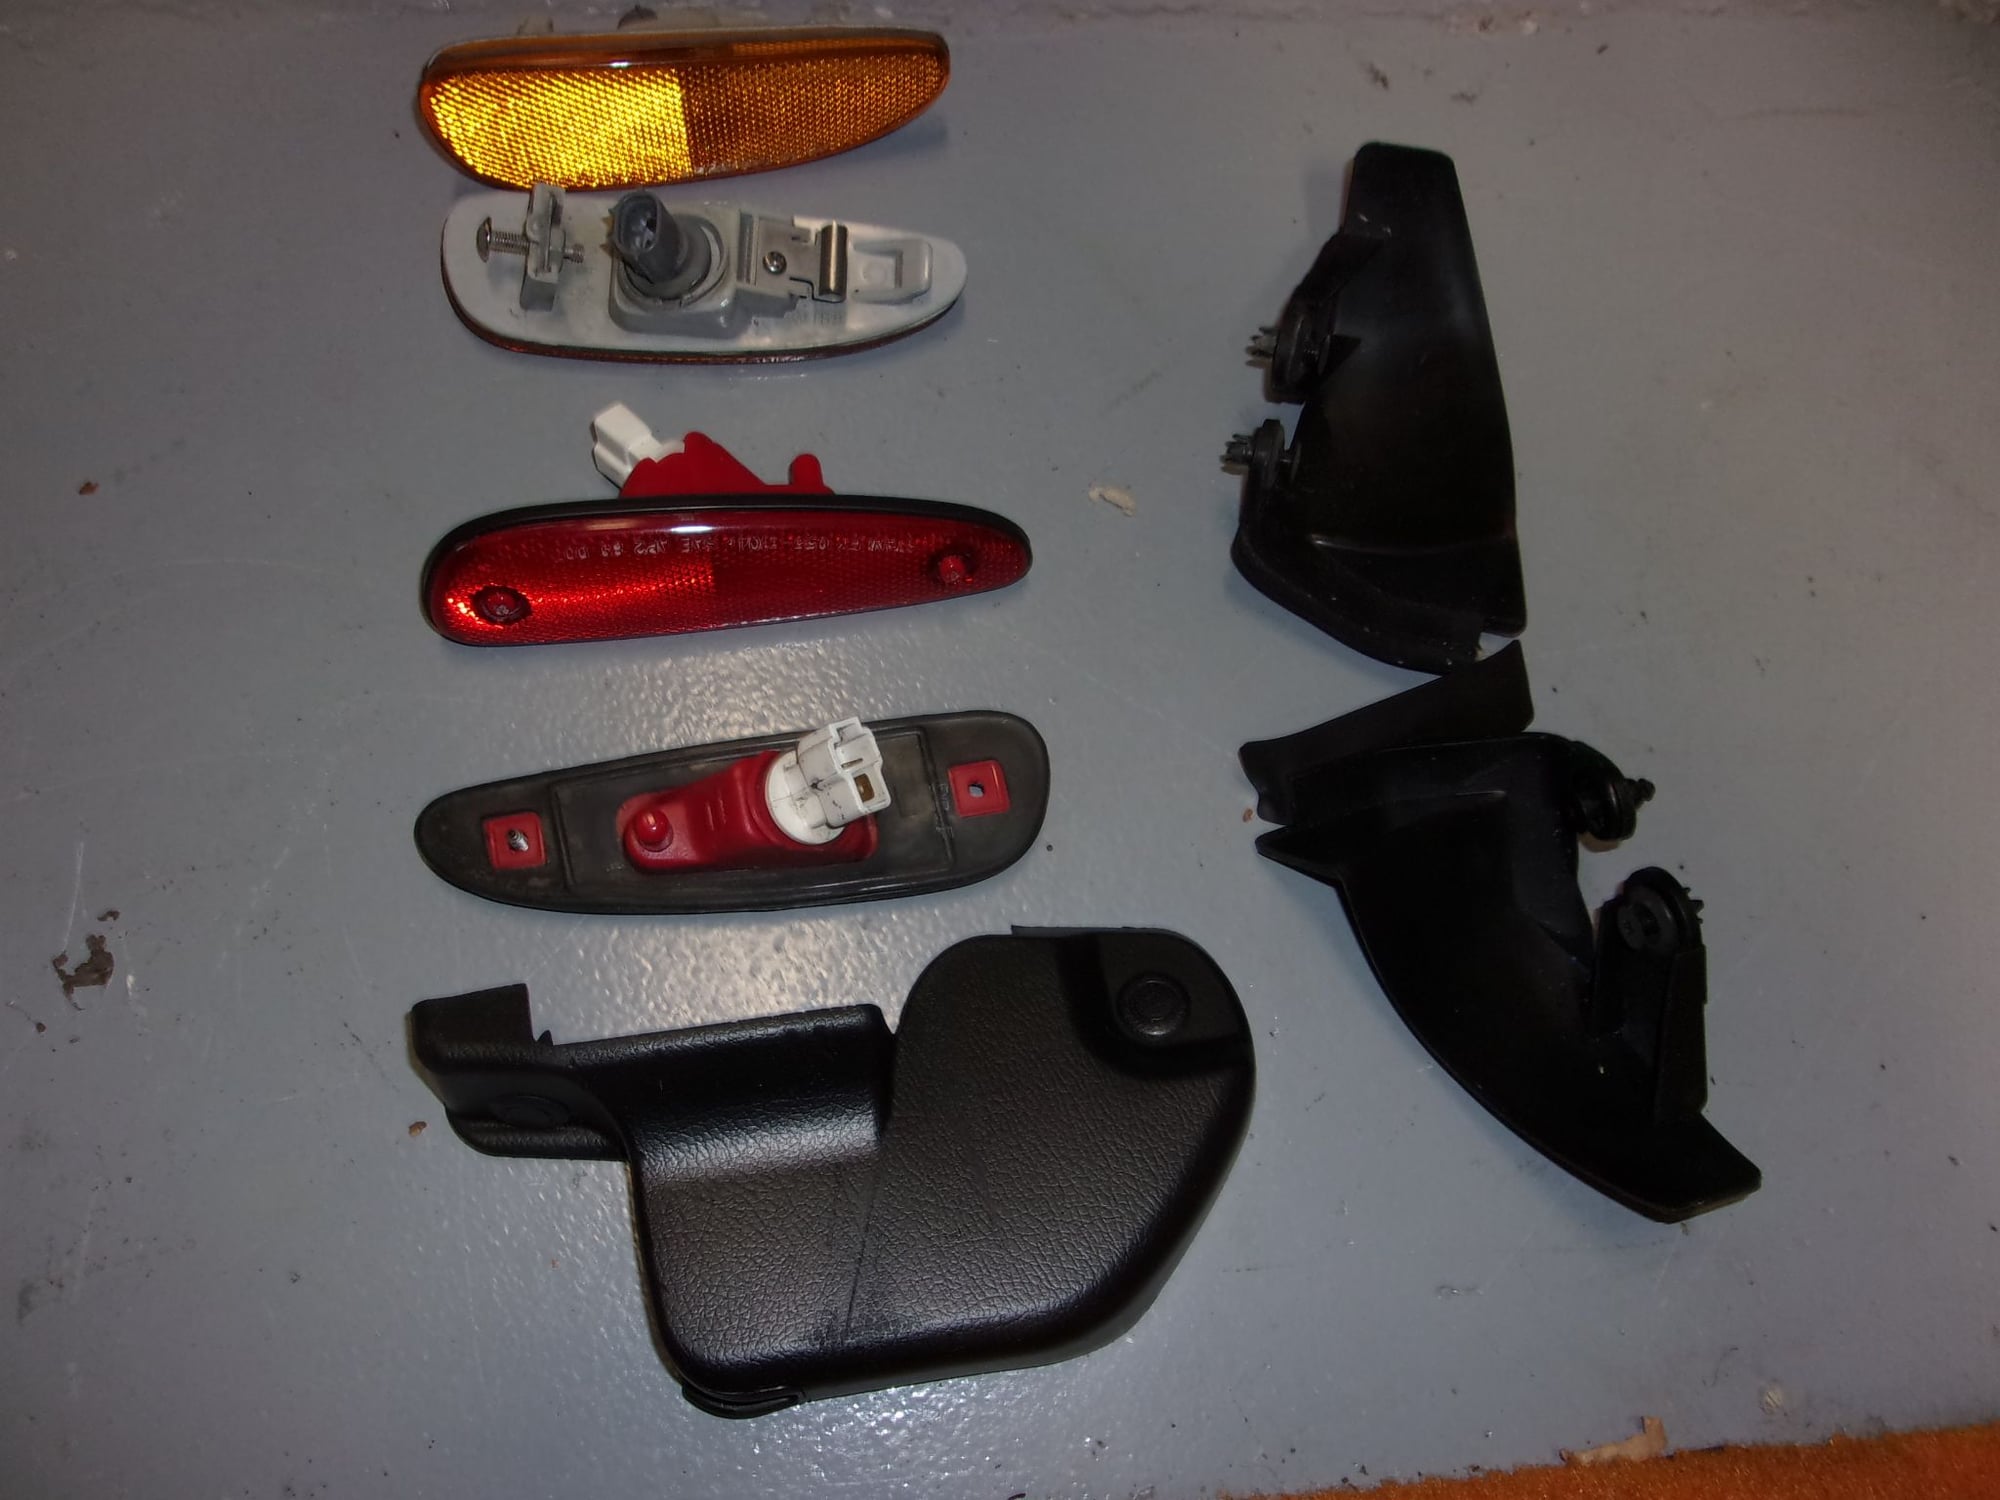 Accessories - HARD-TO-FIND parts 5 - Used - 1993 to 1994 Mazda RX-7 - Murfreesboro, TN 37130, United States